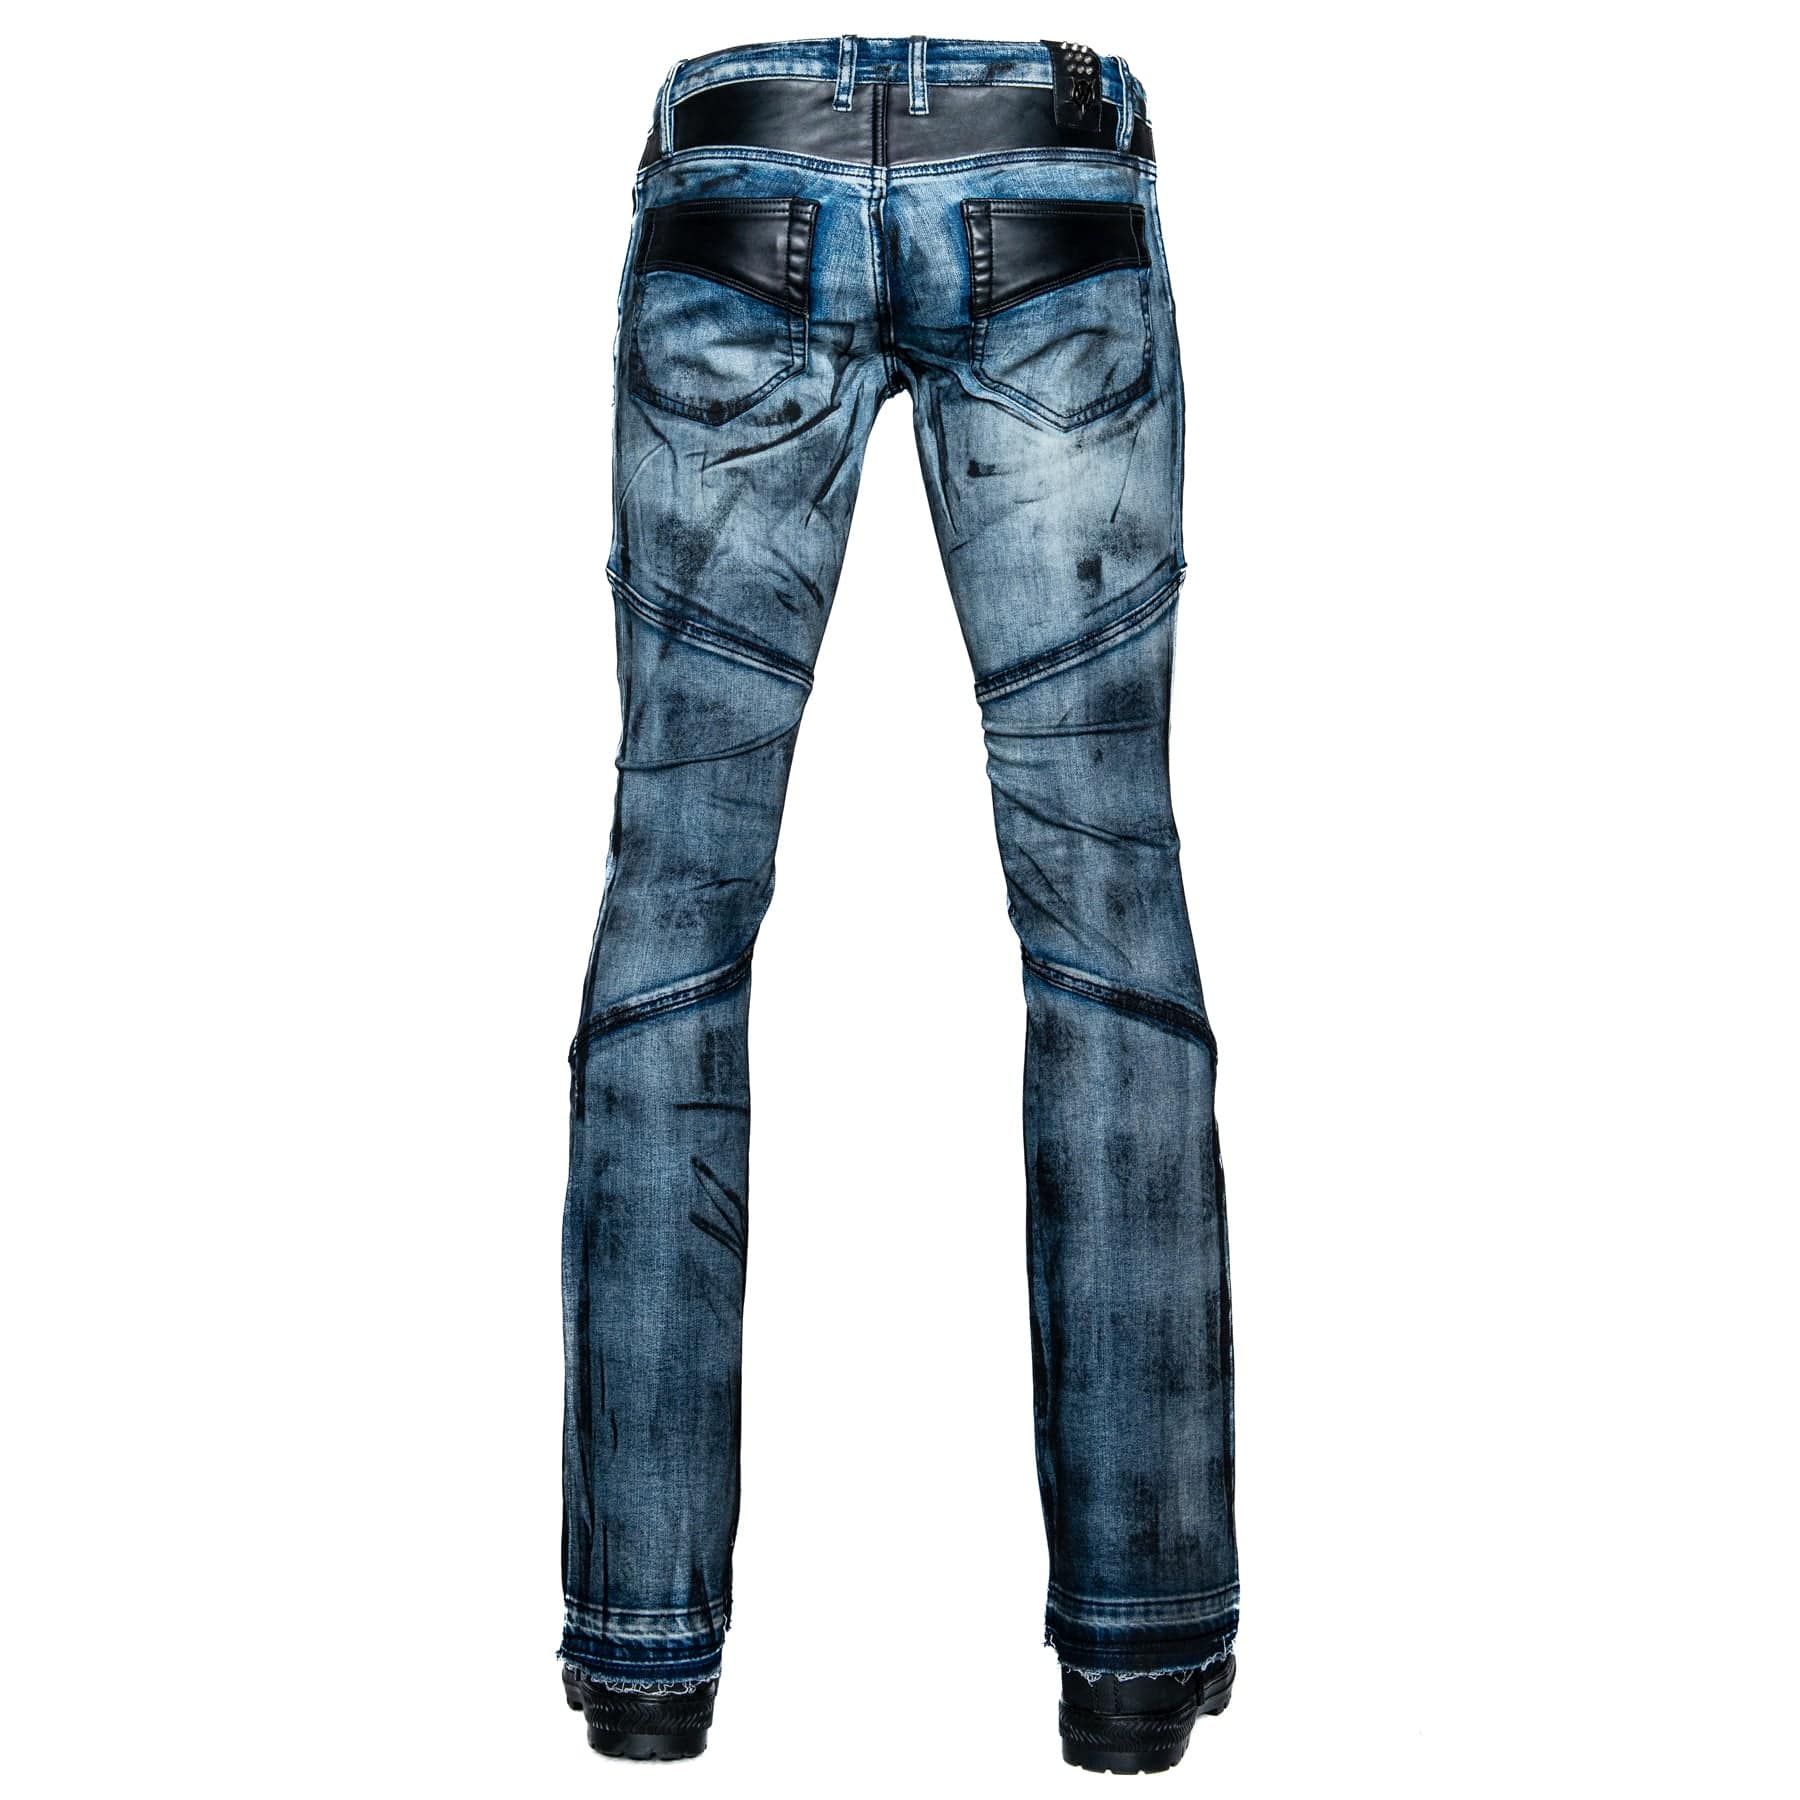 Custom Chop Shop Pants Wornstar Custom Jeans - Black Onyx Alloy Wash - Troubadour